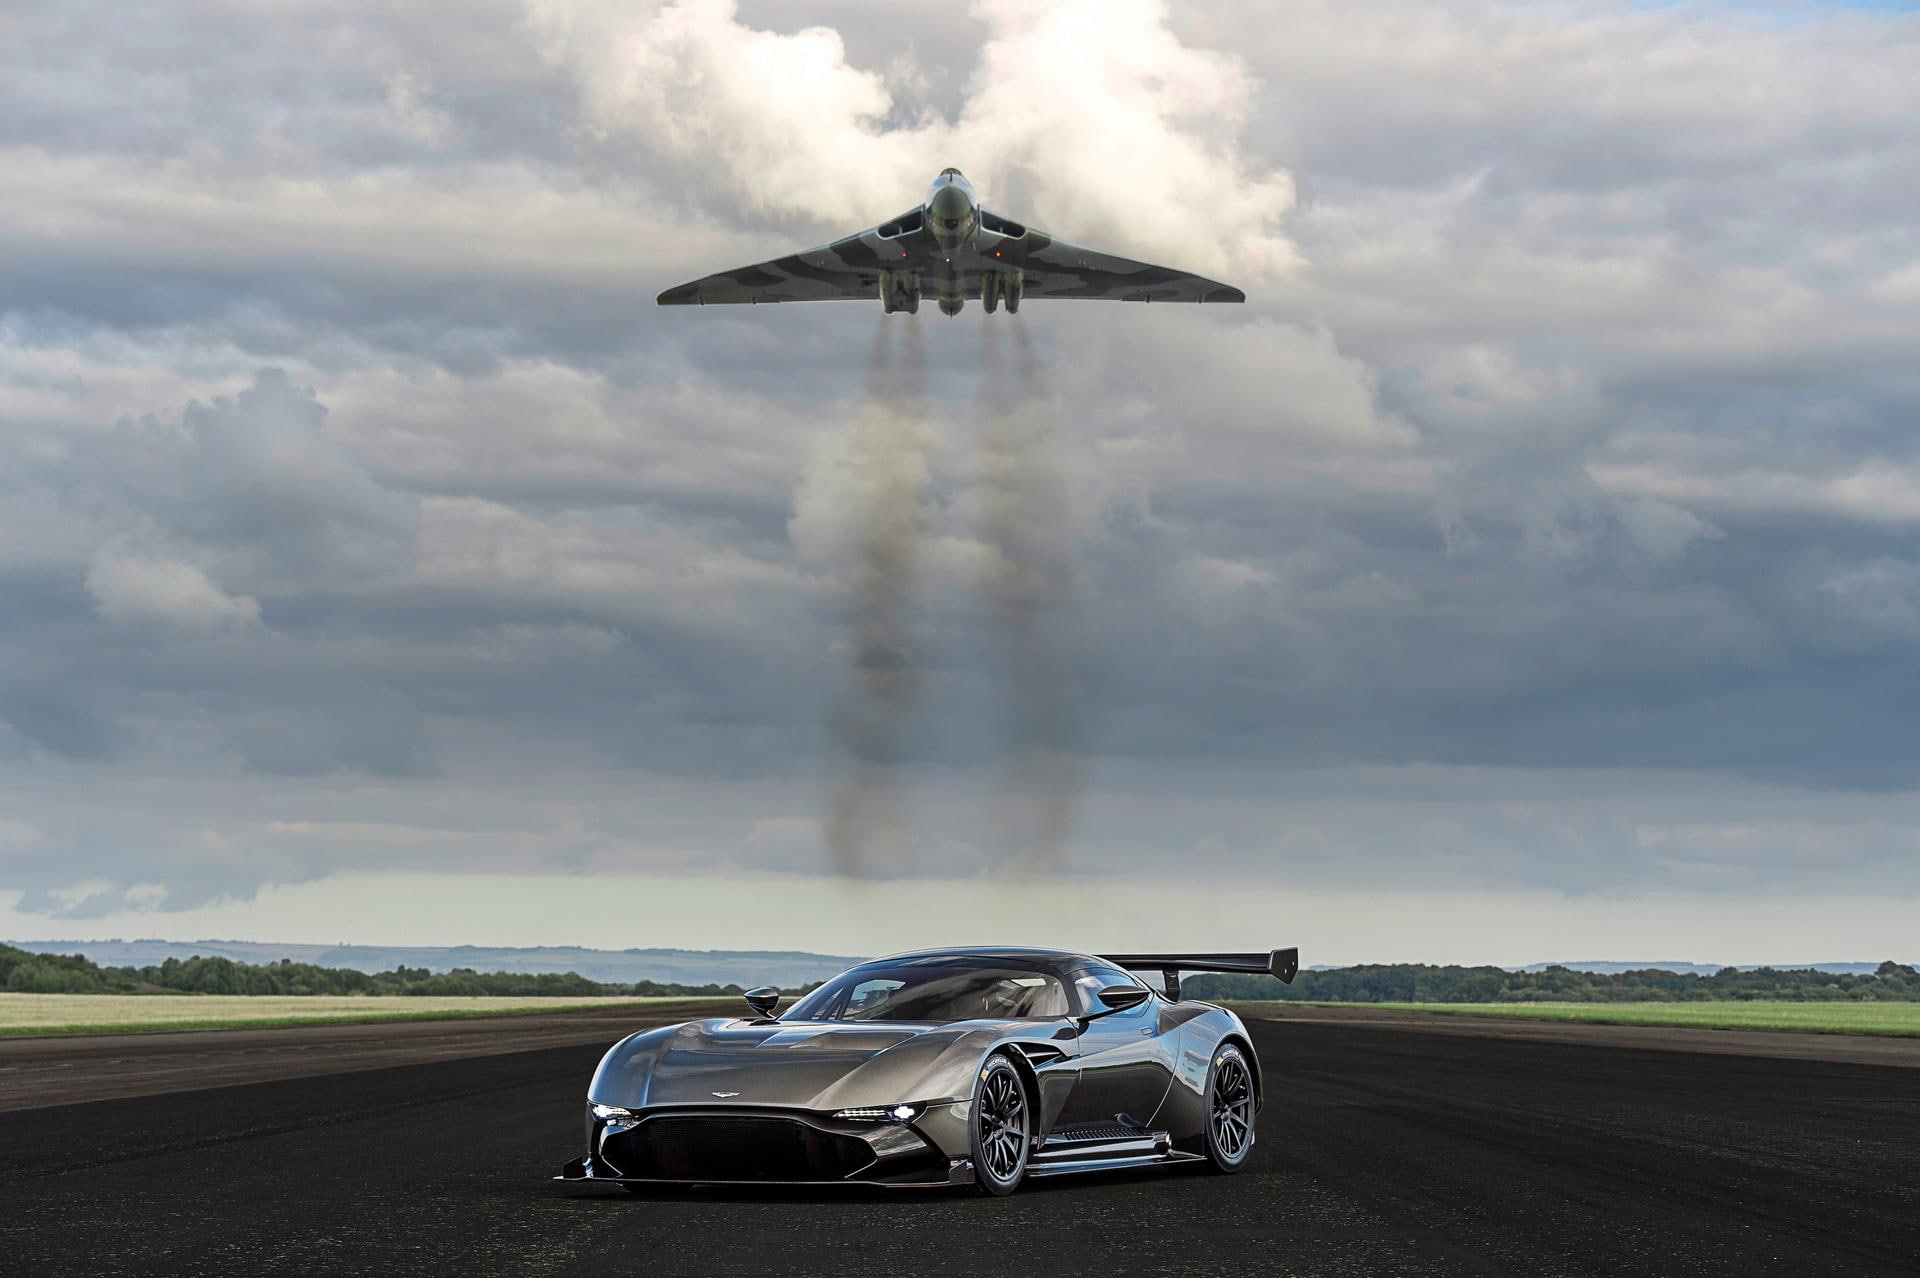 aston martin vulcan bomber namesake, car, mode of transportation